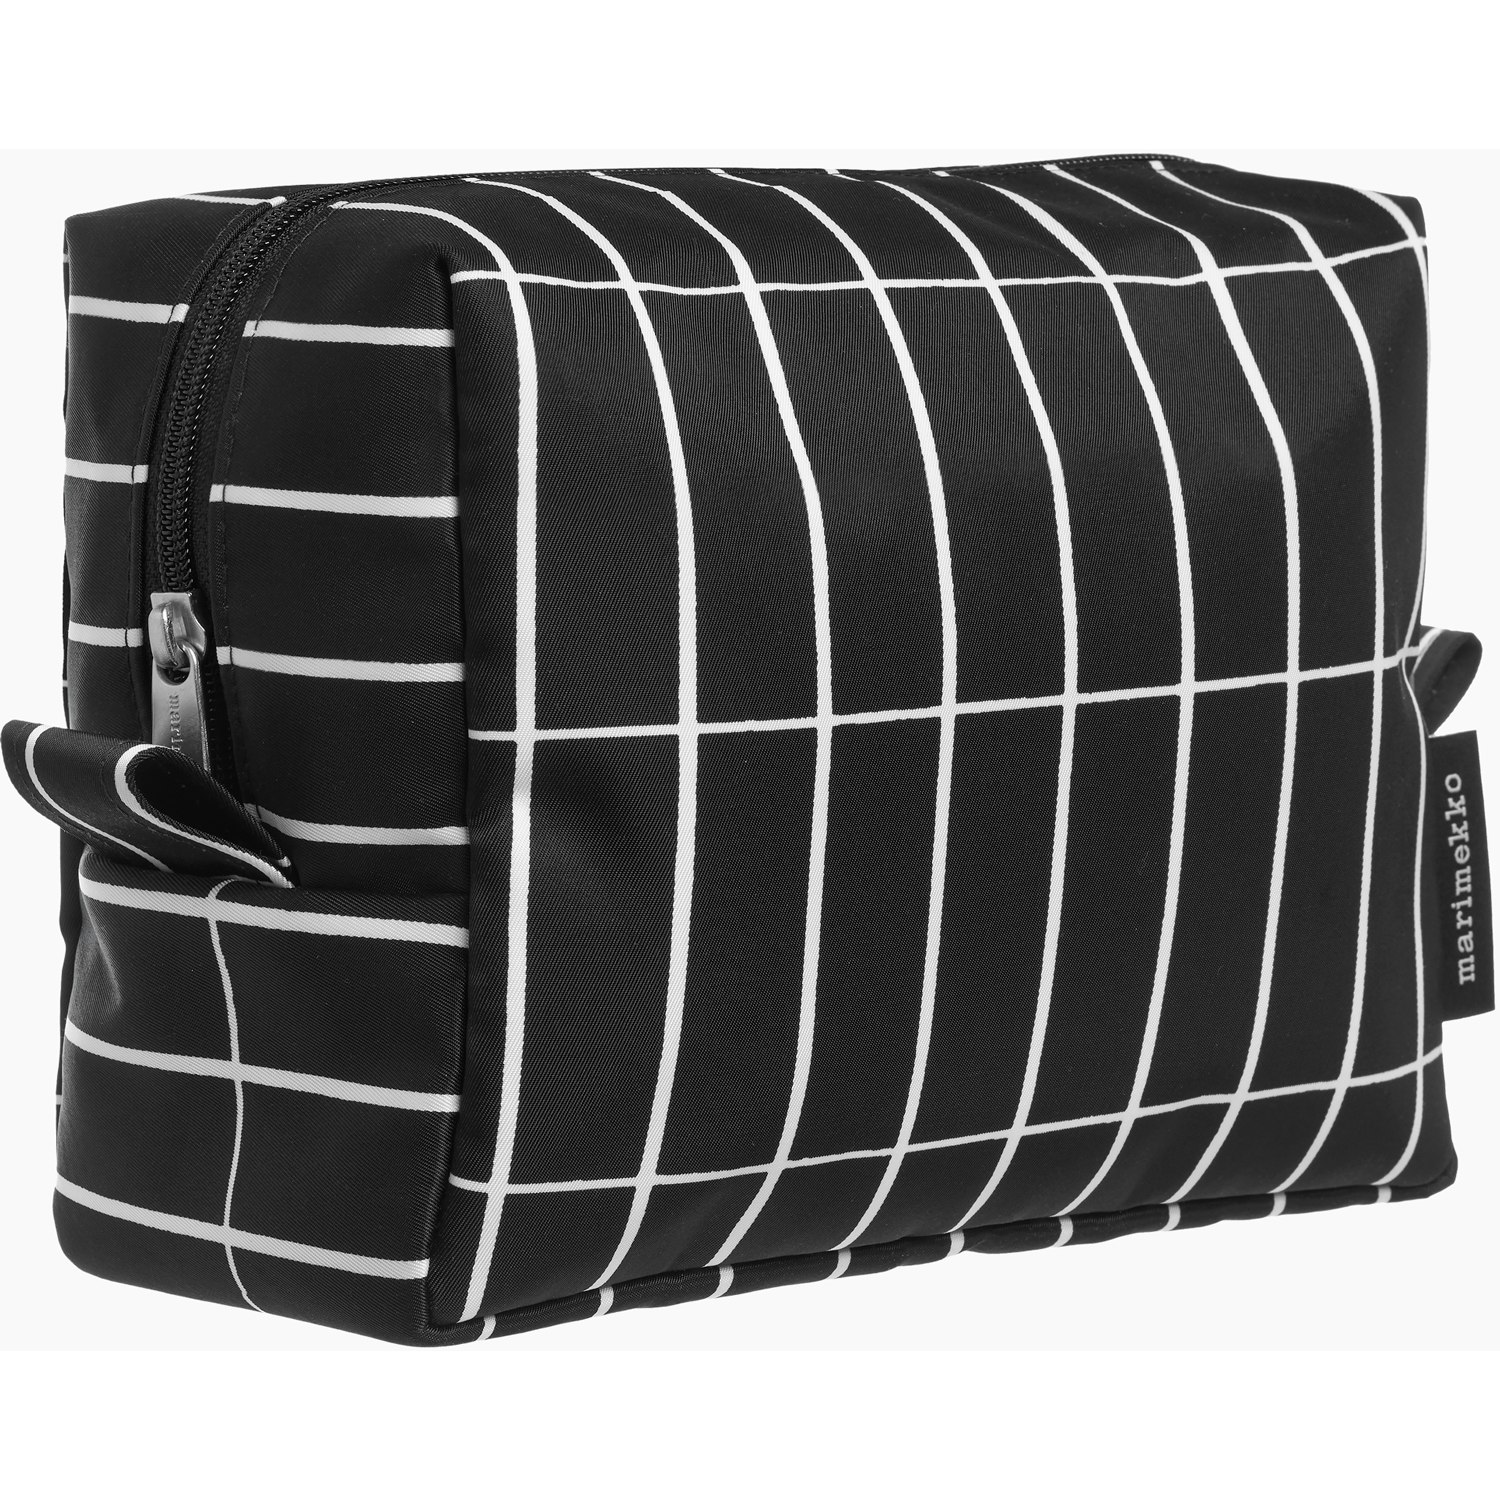 Vilja Pieni Tiiliskivi Cosmetic Bag, Black / White - Marimekko @ RoyalDesign